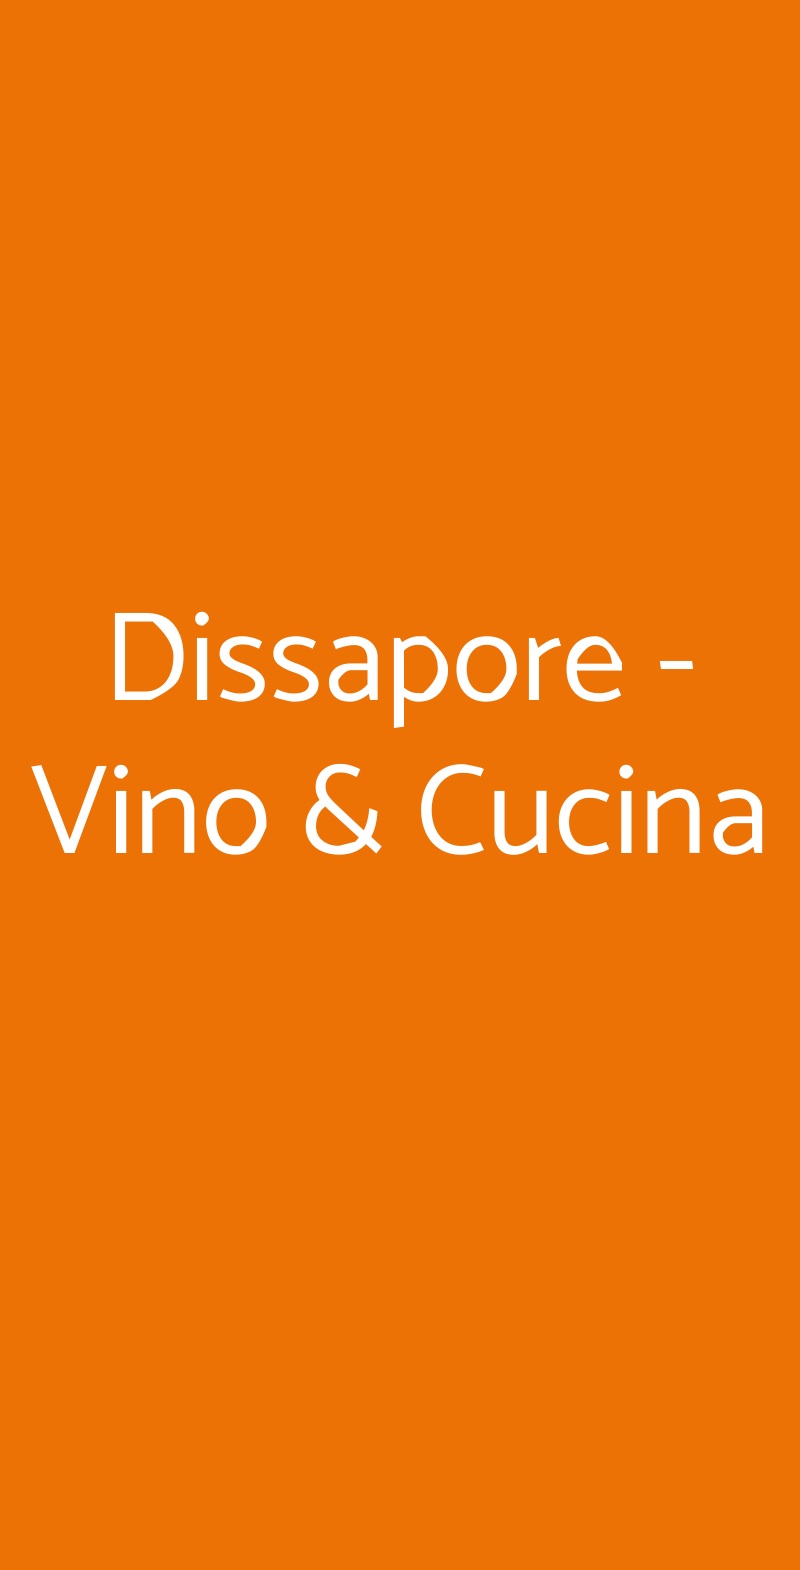 Dissapore - Vino & Cucina Firenze menù 1 pagina